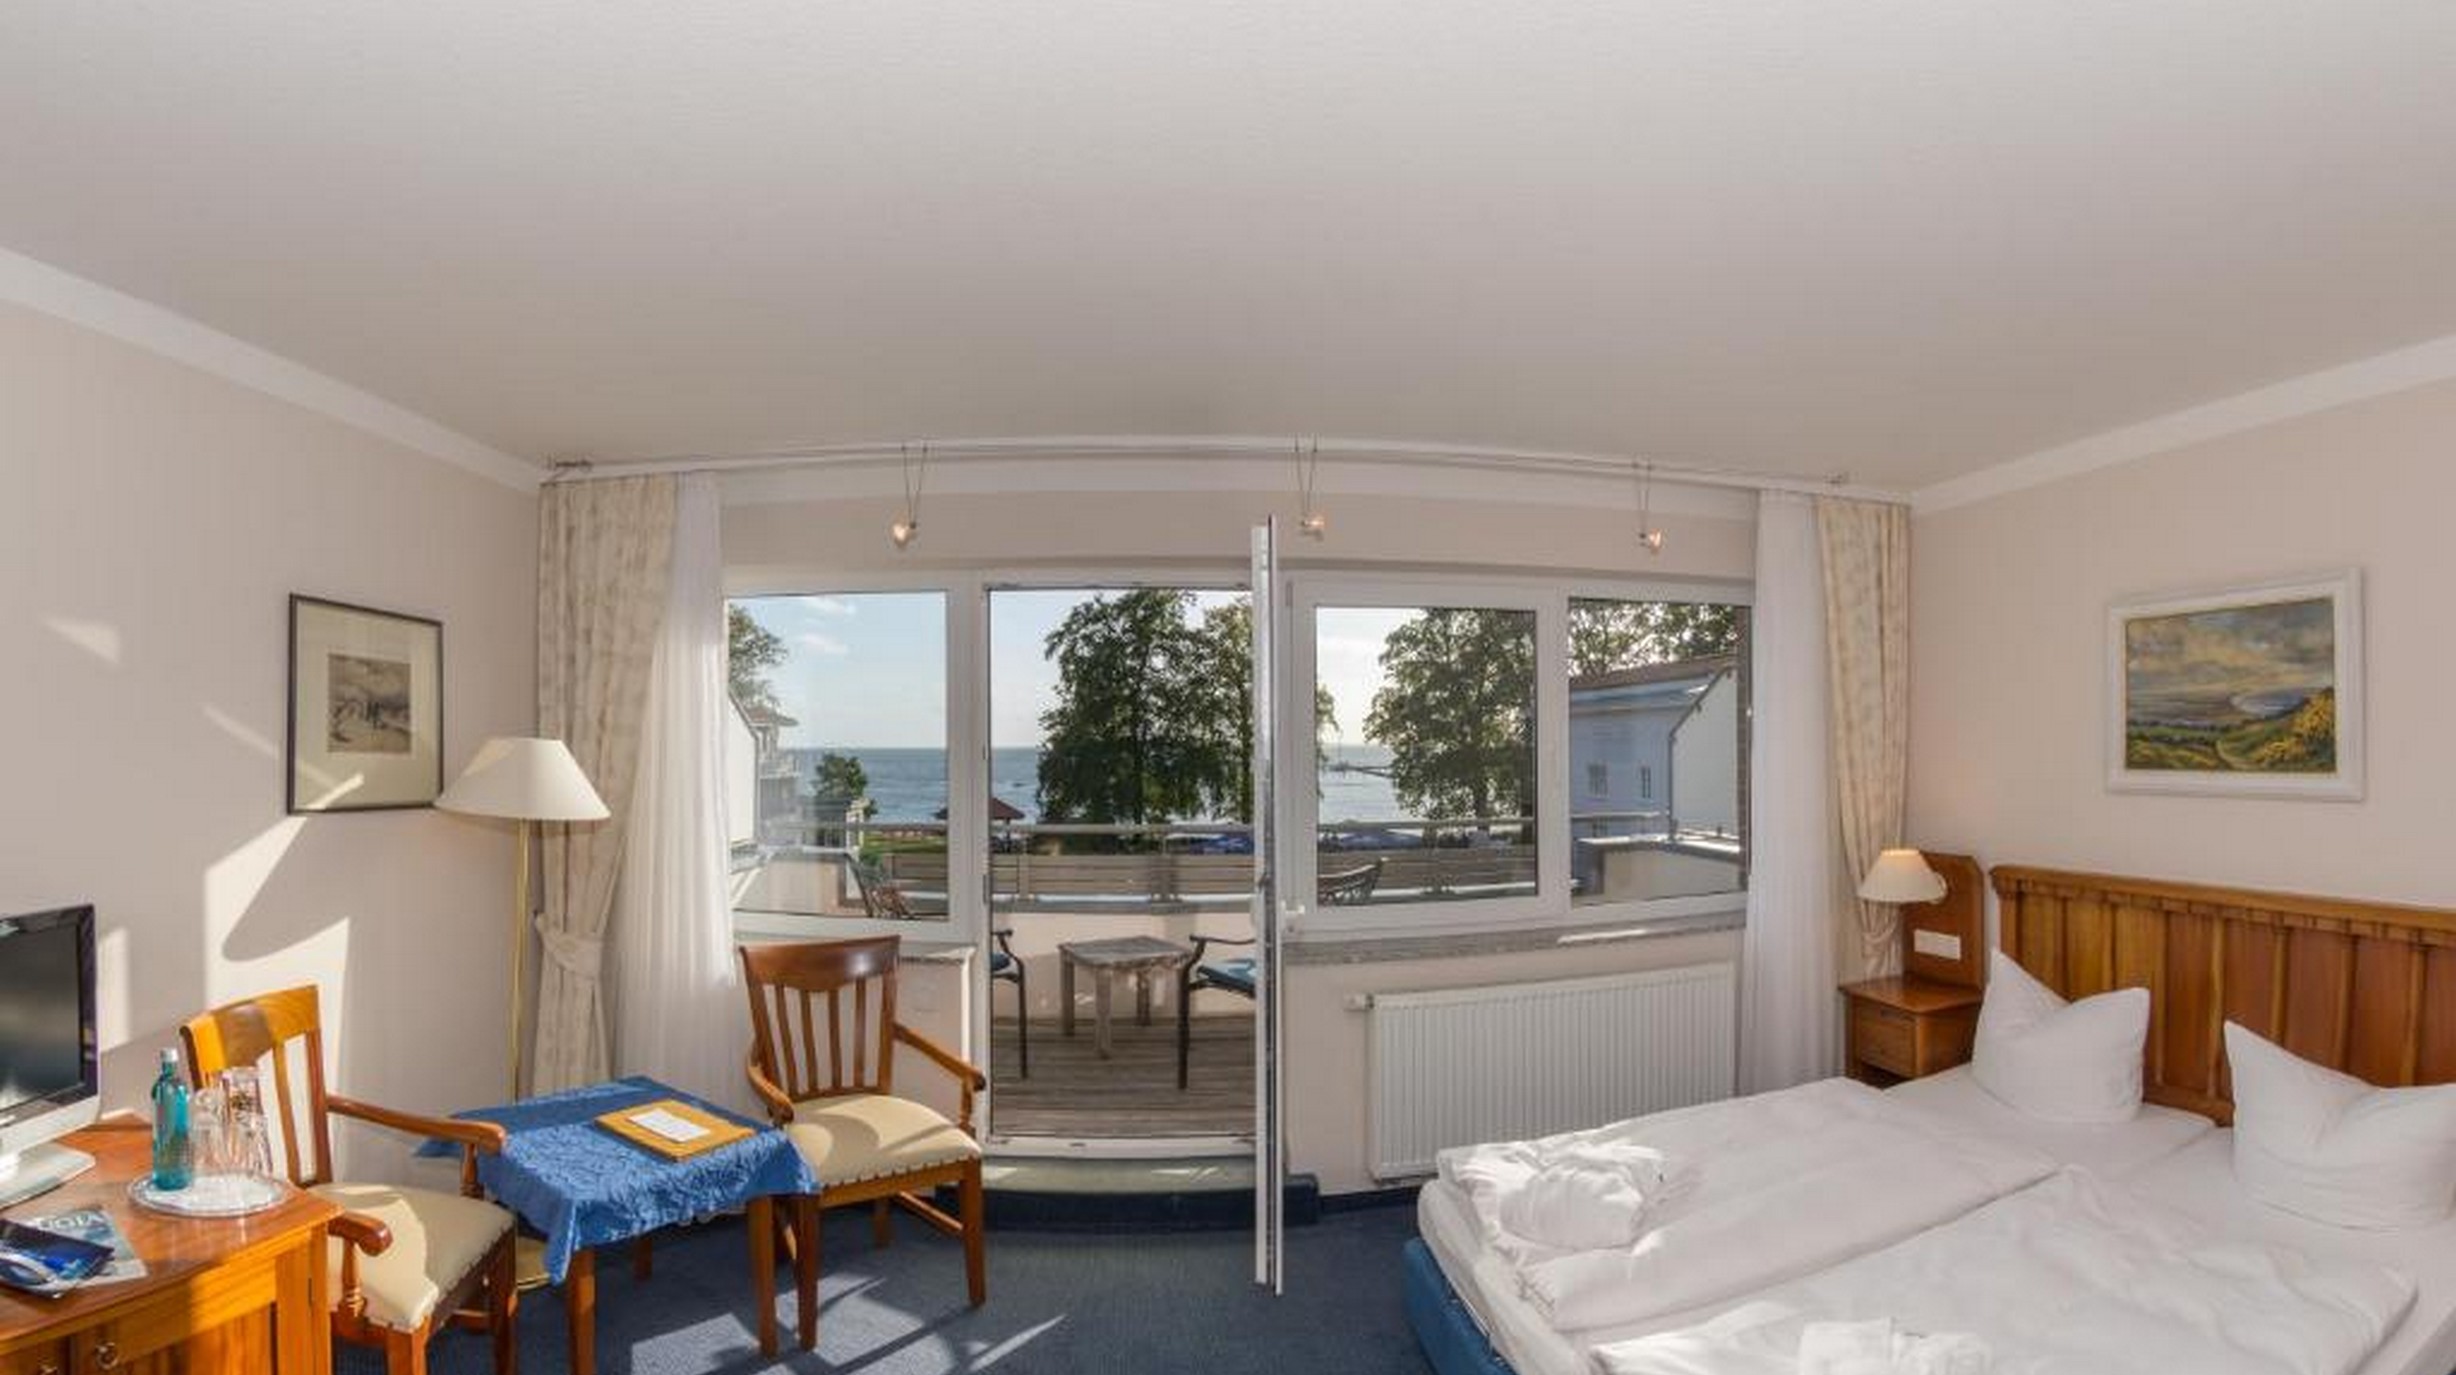 Badehaus Goor Double Room Seaside booking